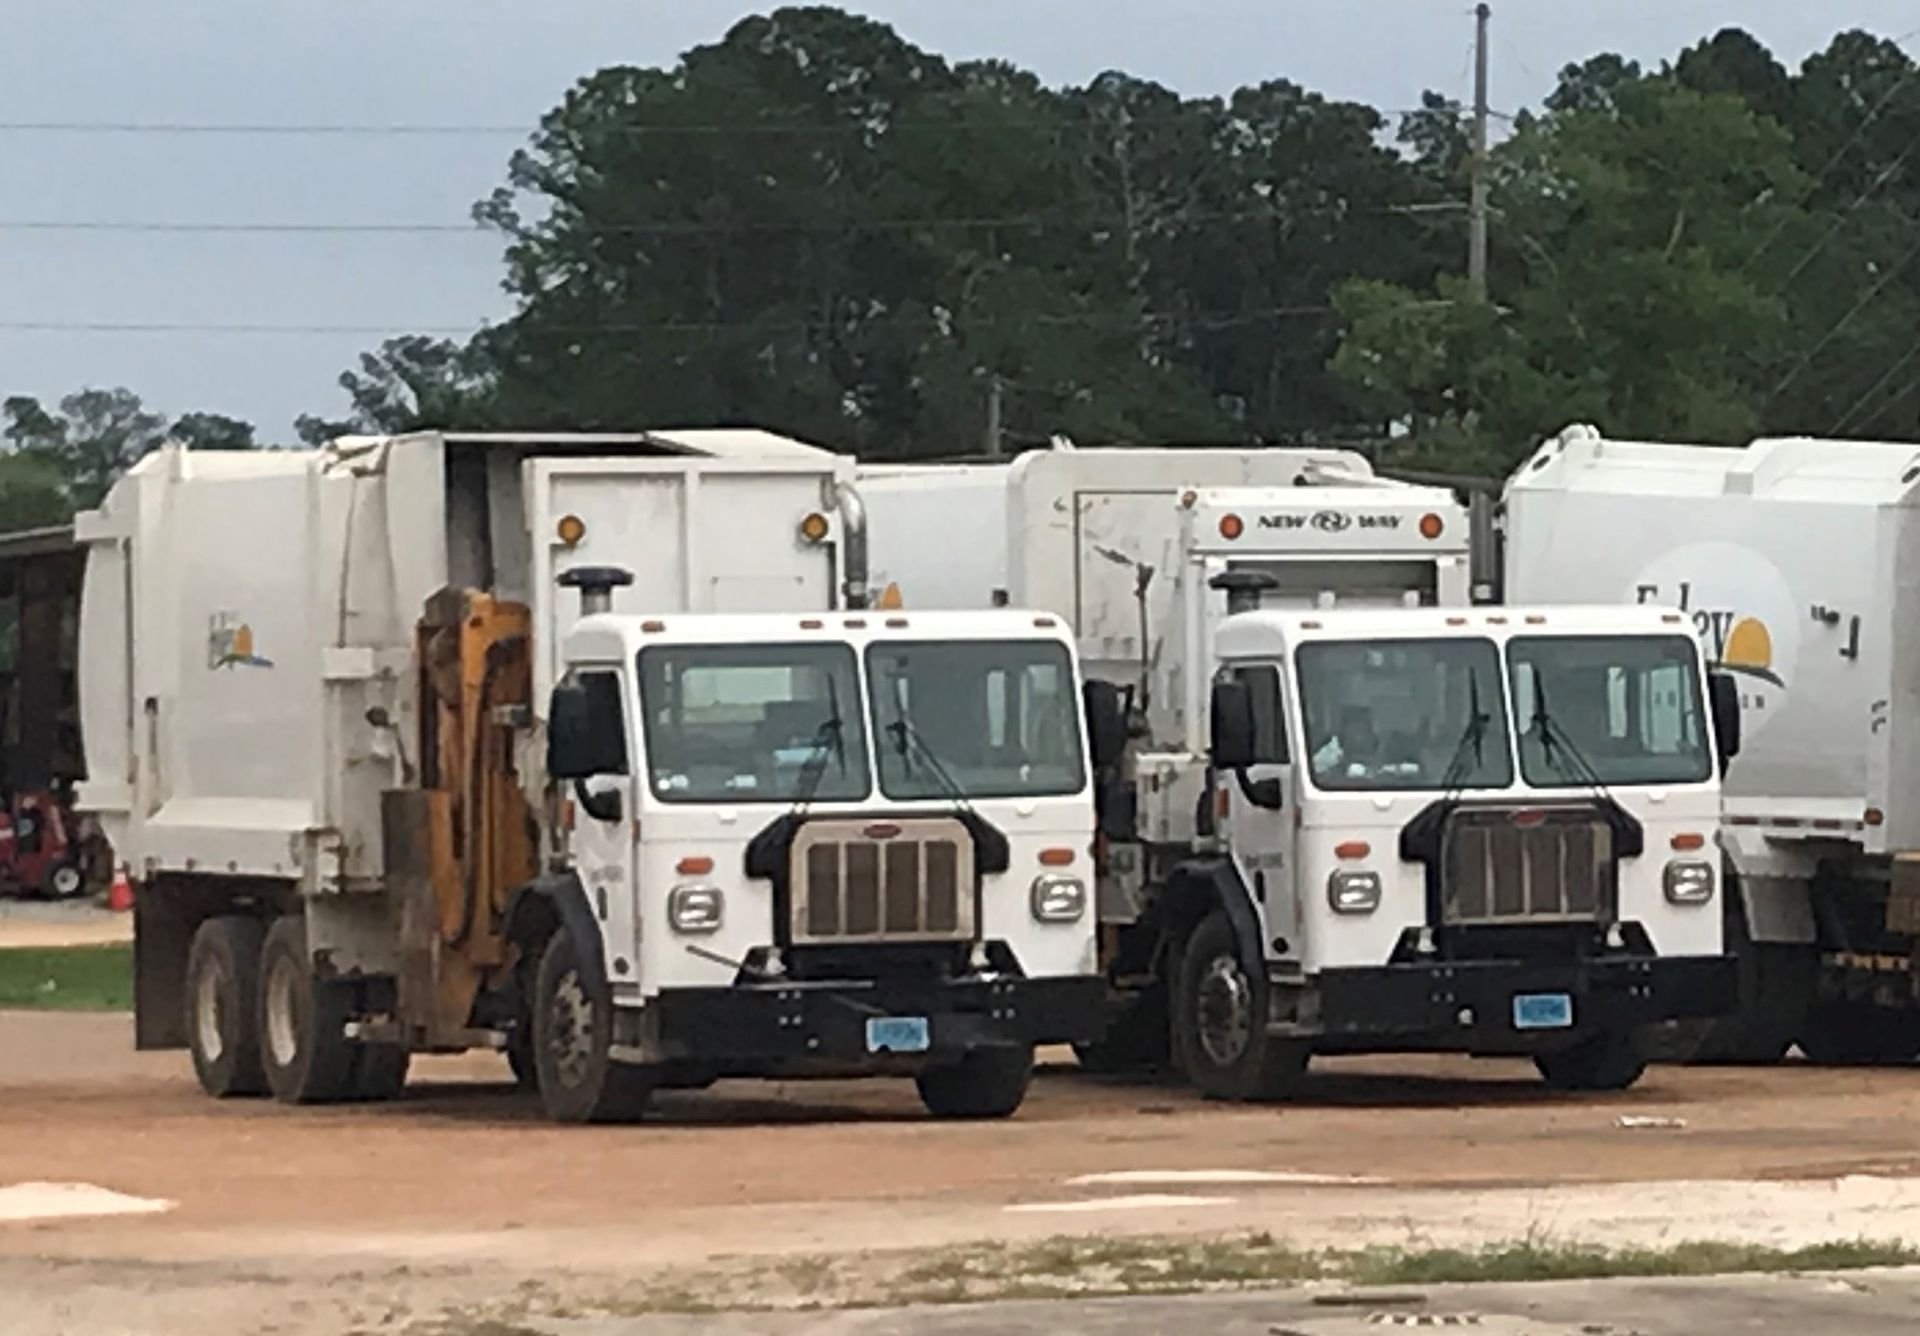 Foley Plans Early Order for Four New Sanitation Trucks